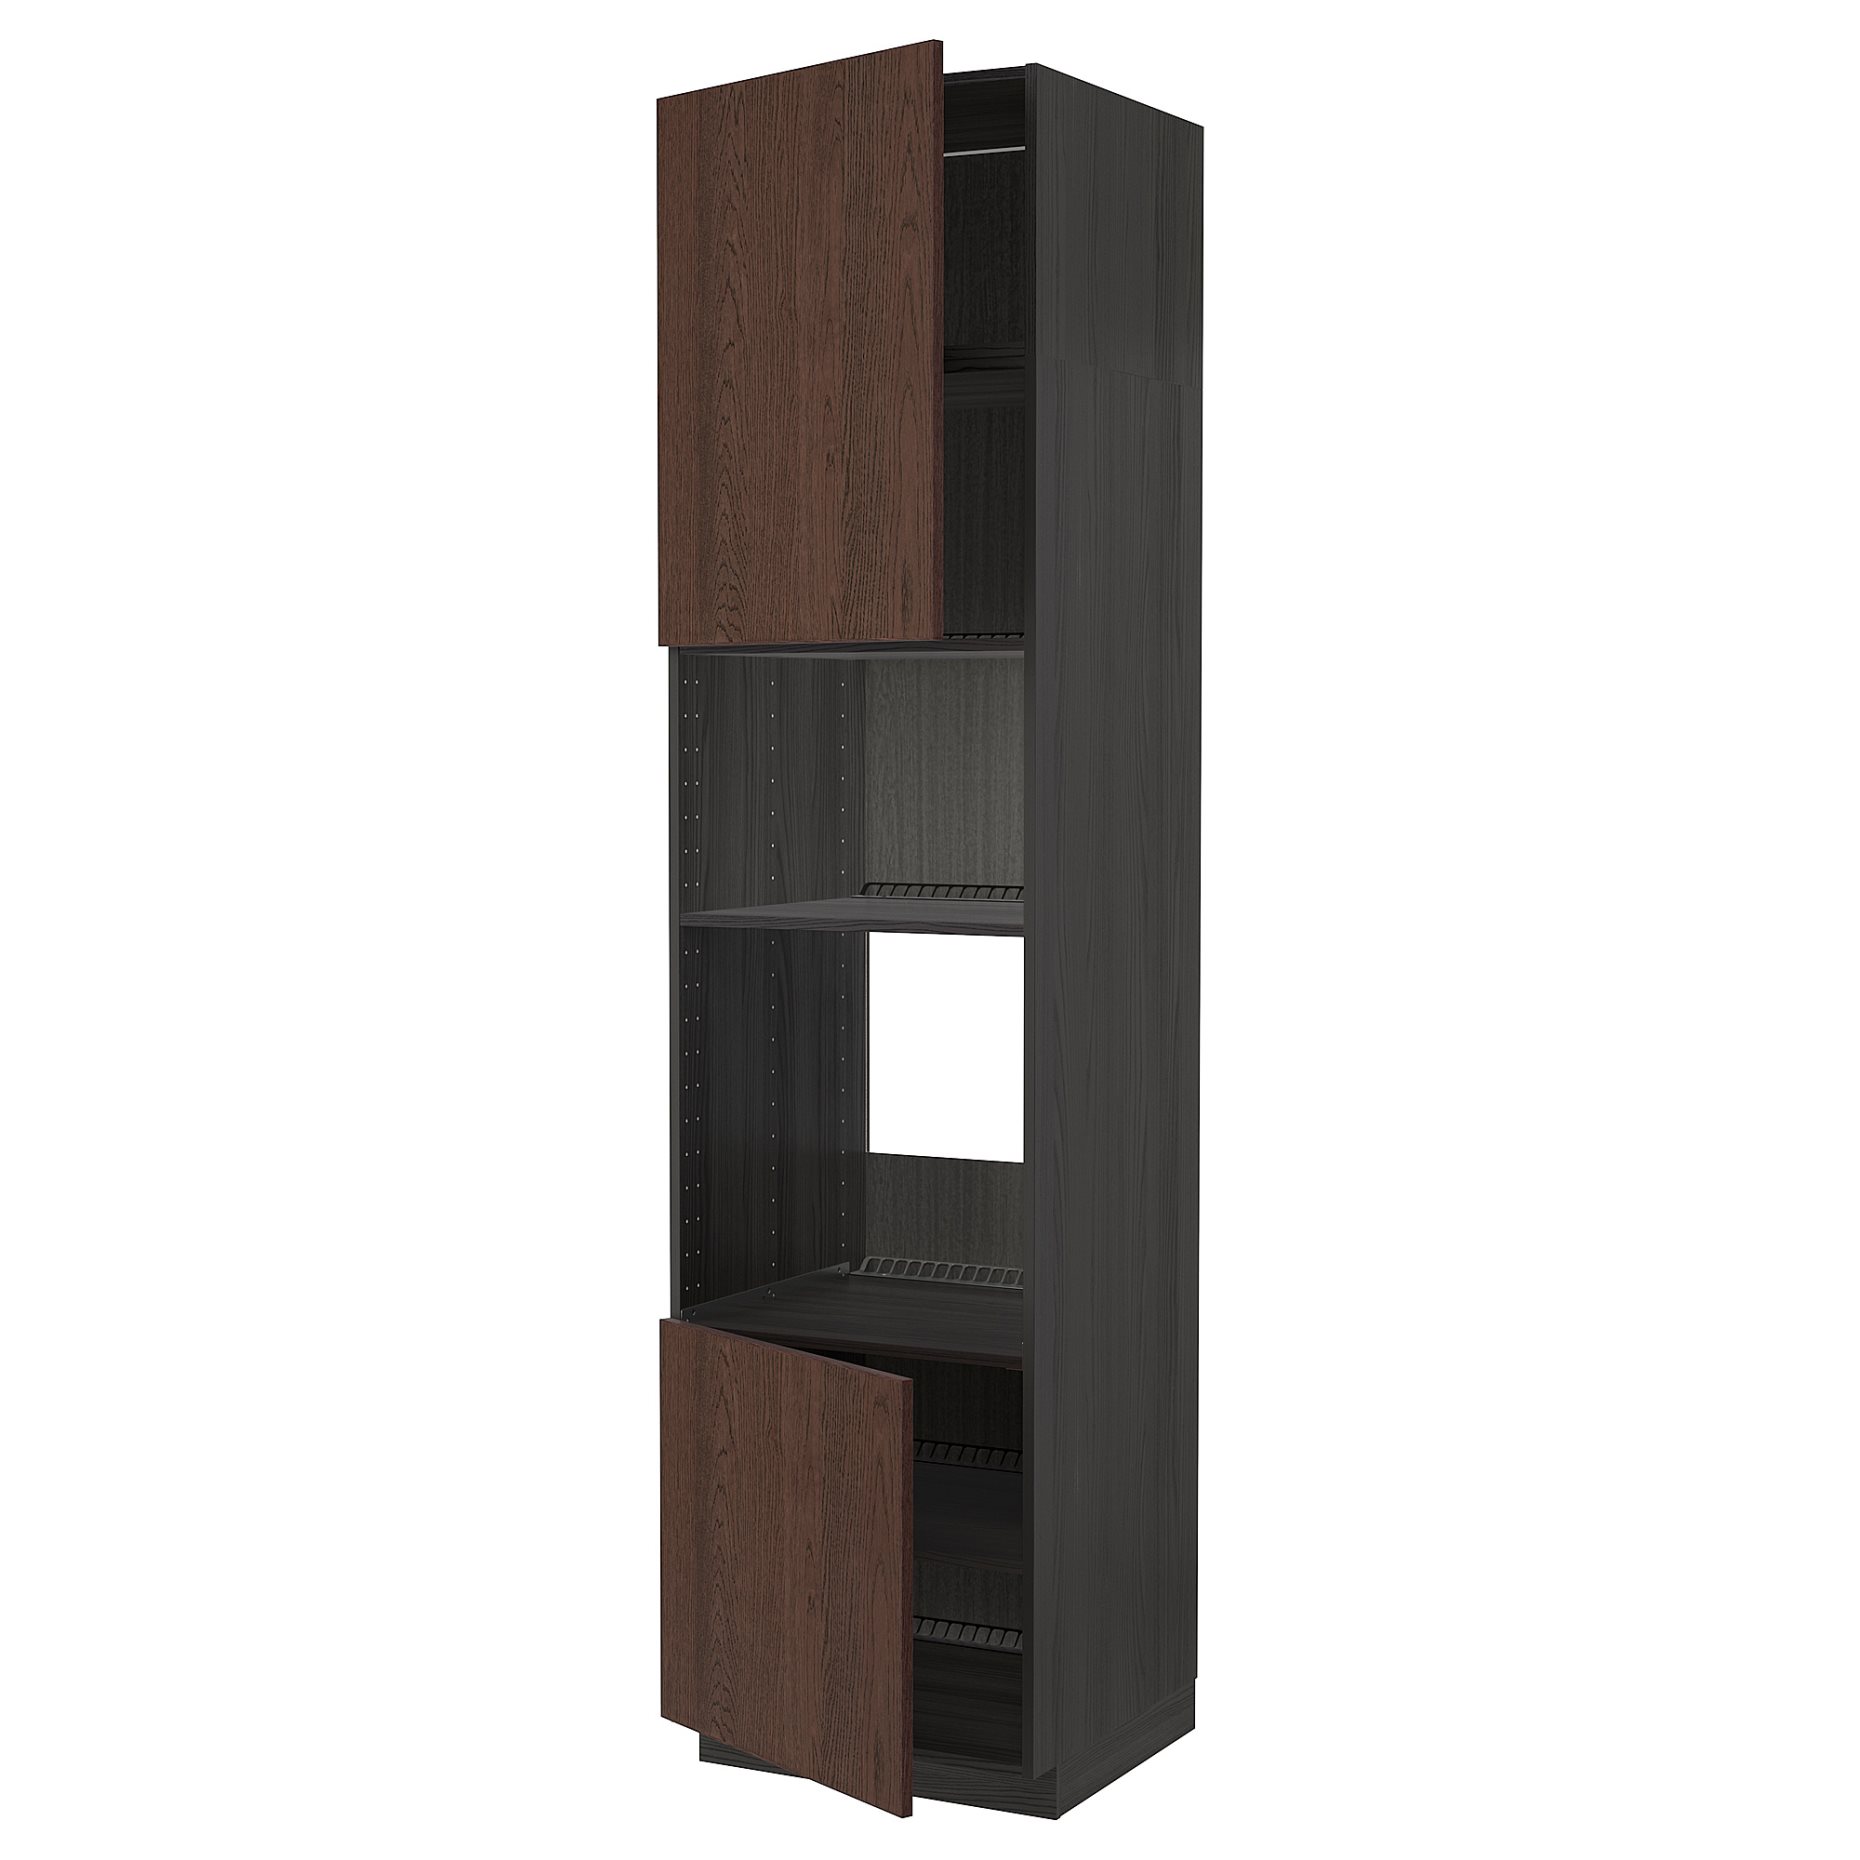 METOD, ψηλό ντουλάπι για φούρνο μικροκυμάτων με 2 πόρτες/ράφια, 60x60x240 cm, 694.594.92